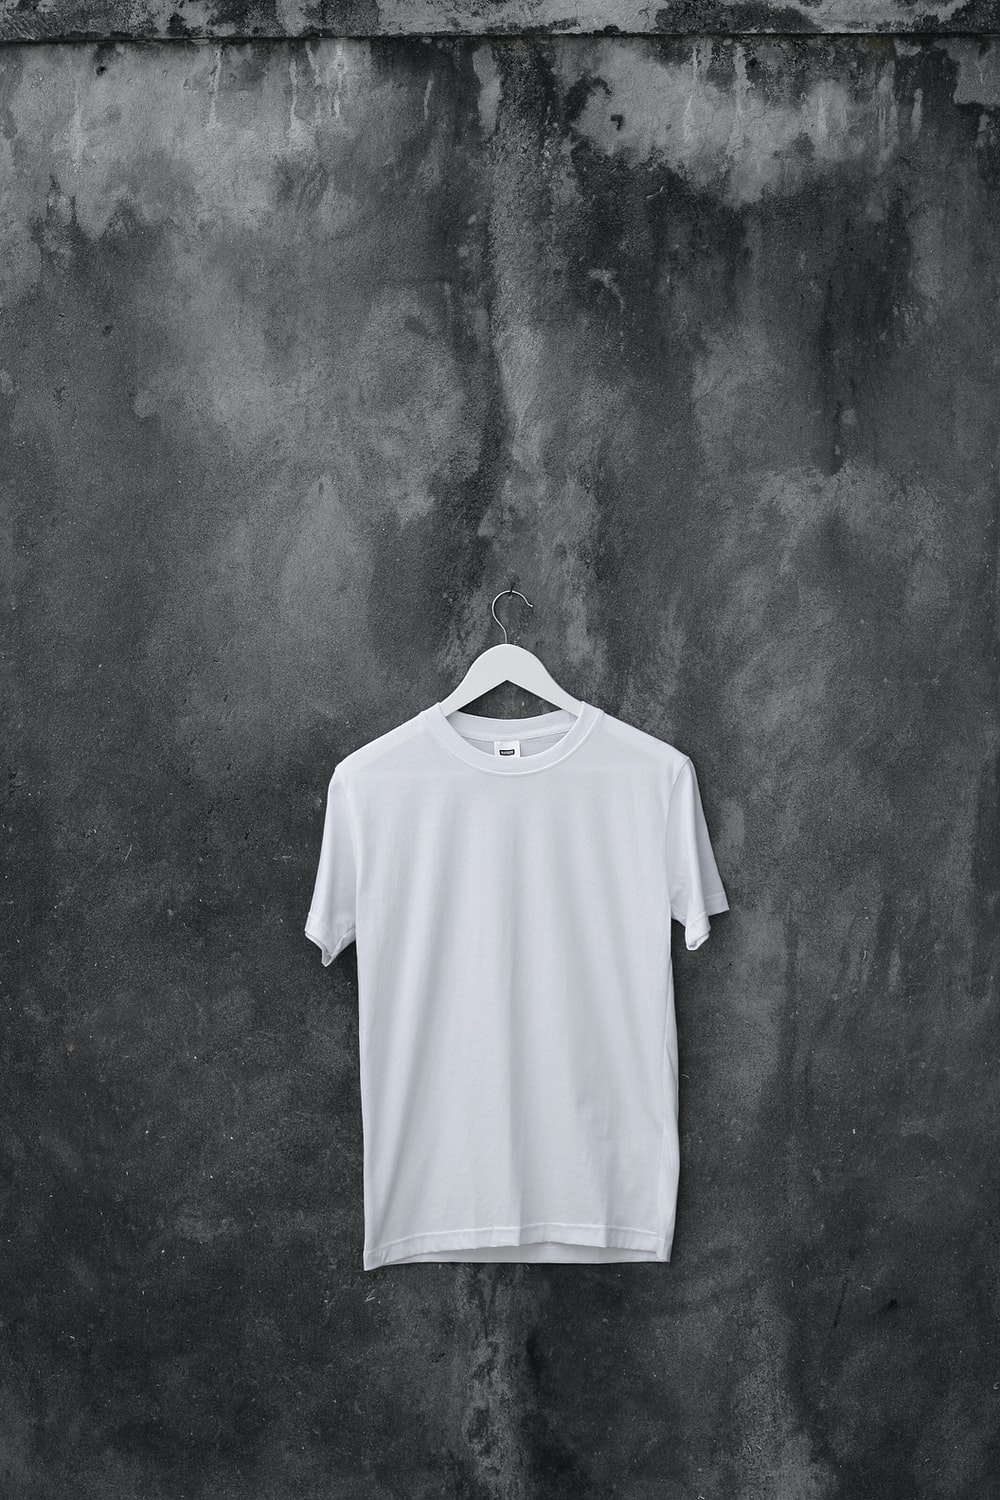 White Shirt Wallpaper Free White Shirt Background